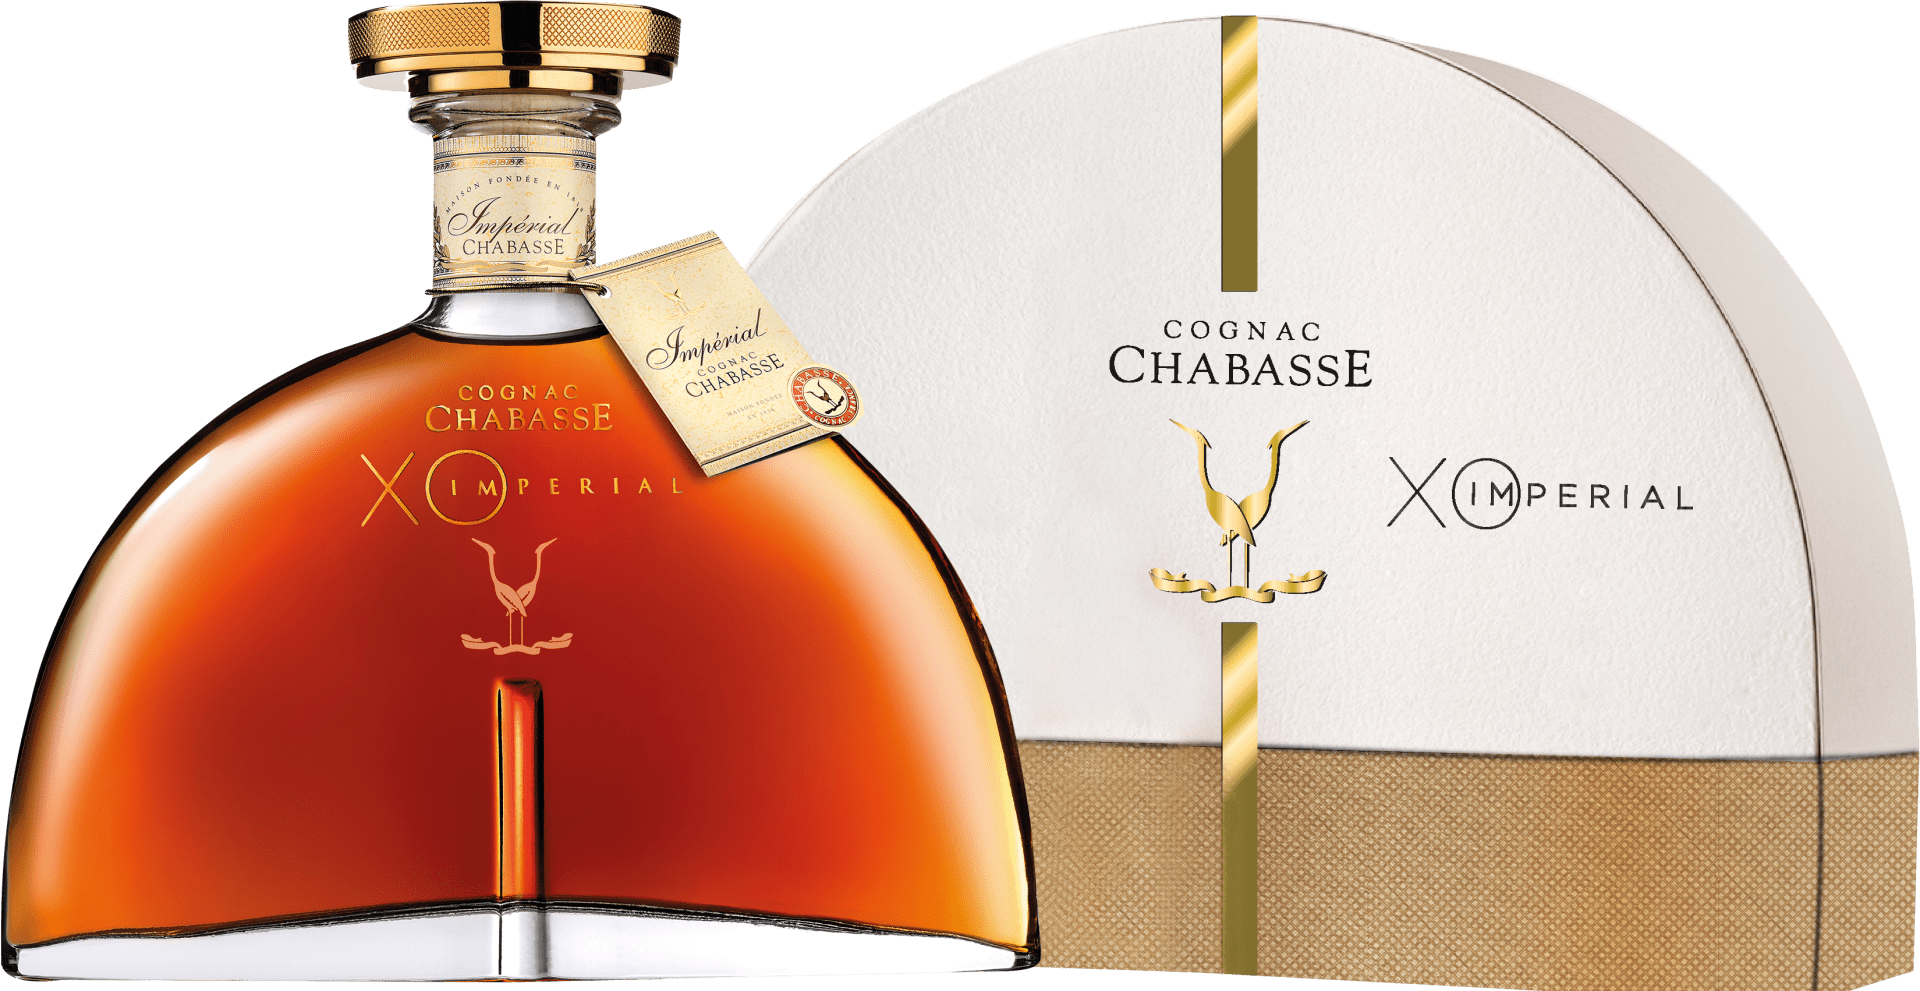 Cognac Chabasse XO Imperial in Halbmond Box